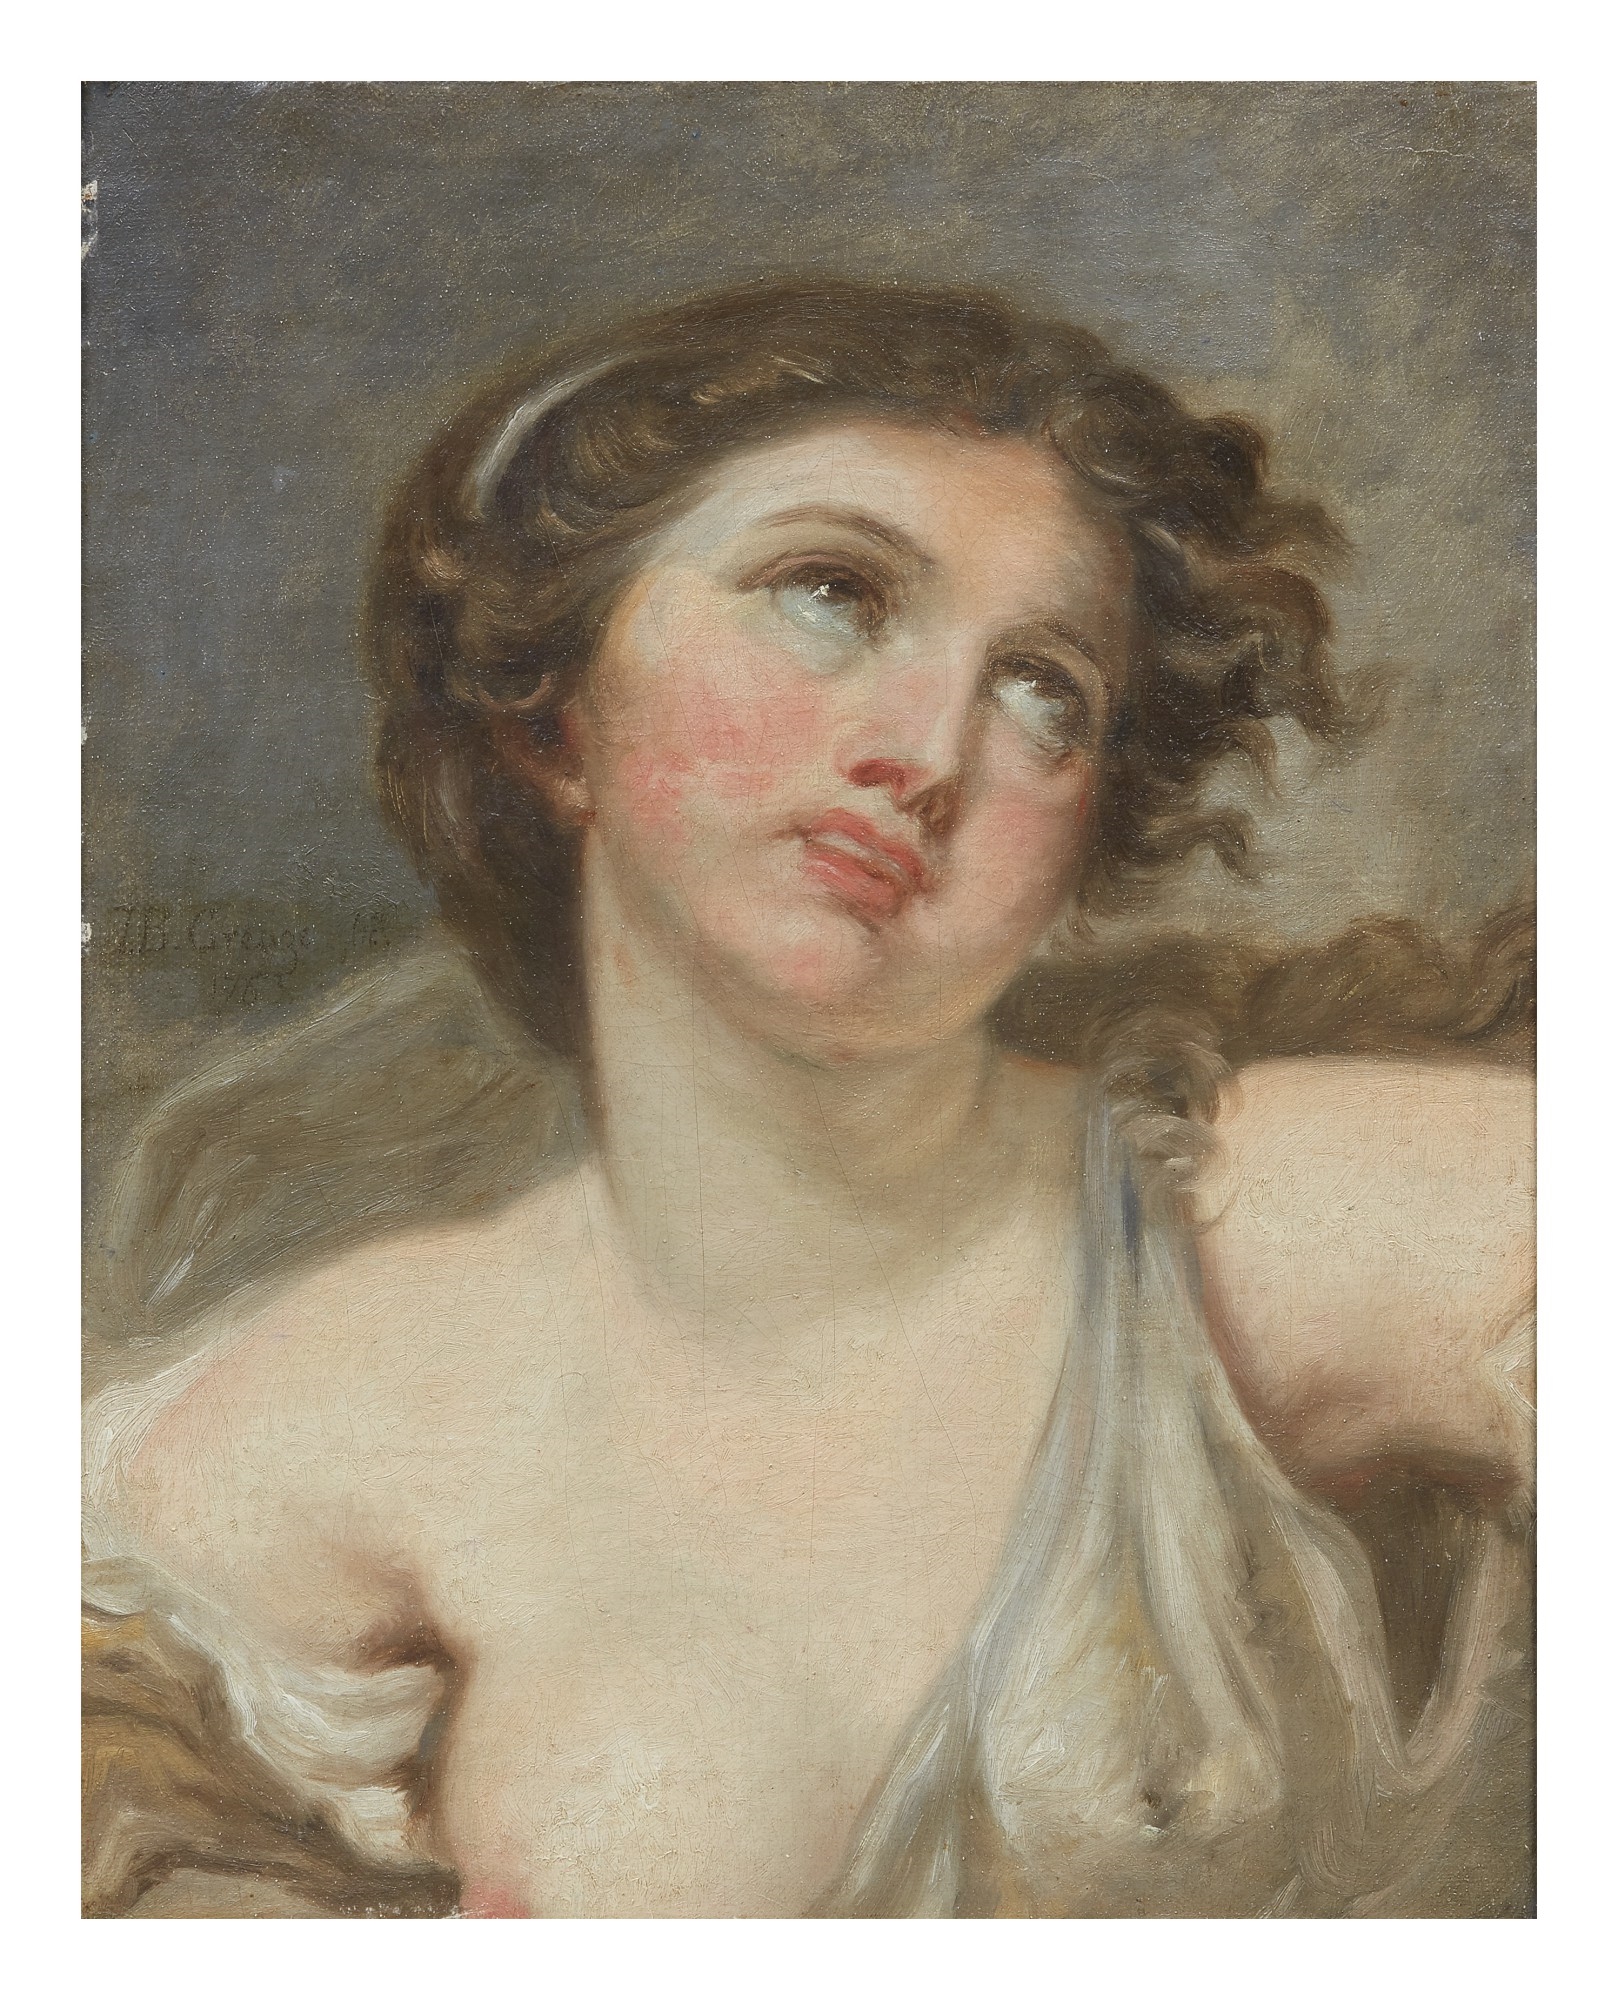 INNOCENCE by Jean-Baptiste Greuze, 1763